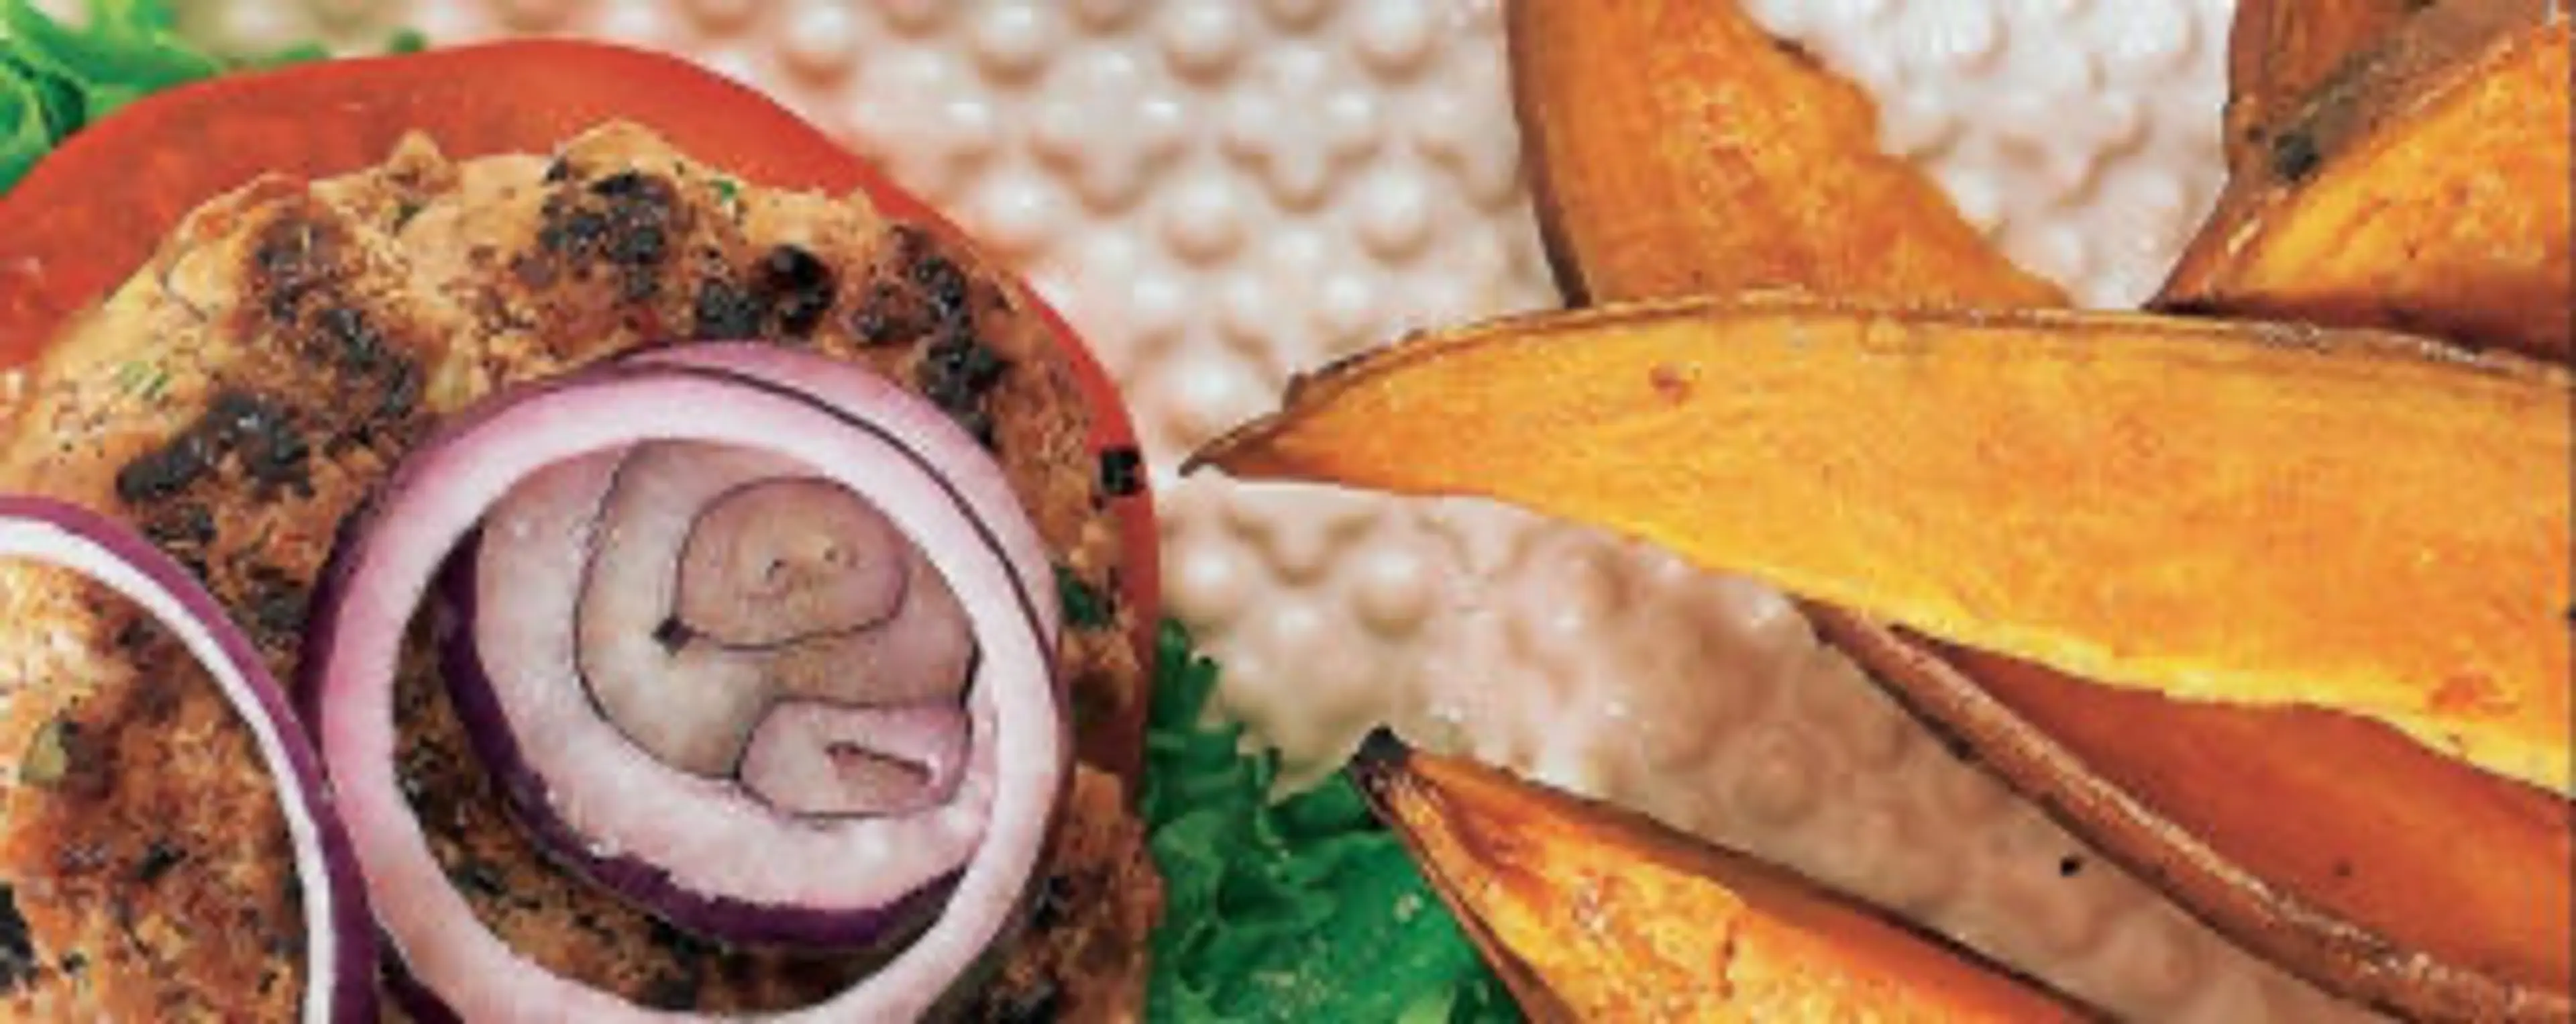 Turkey burgers with sweet potato wedges | Asda Good Living